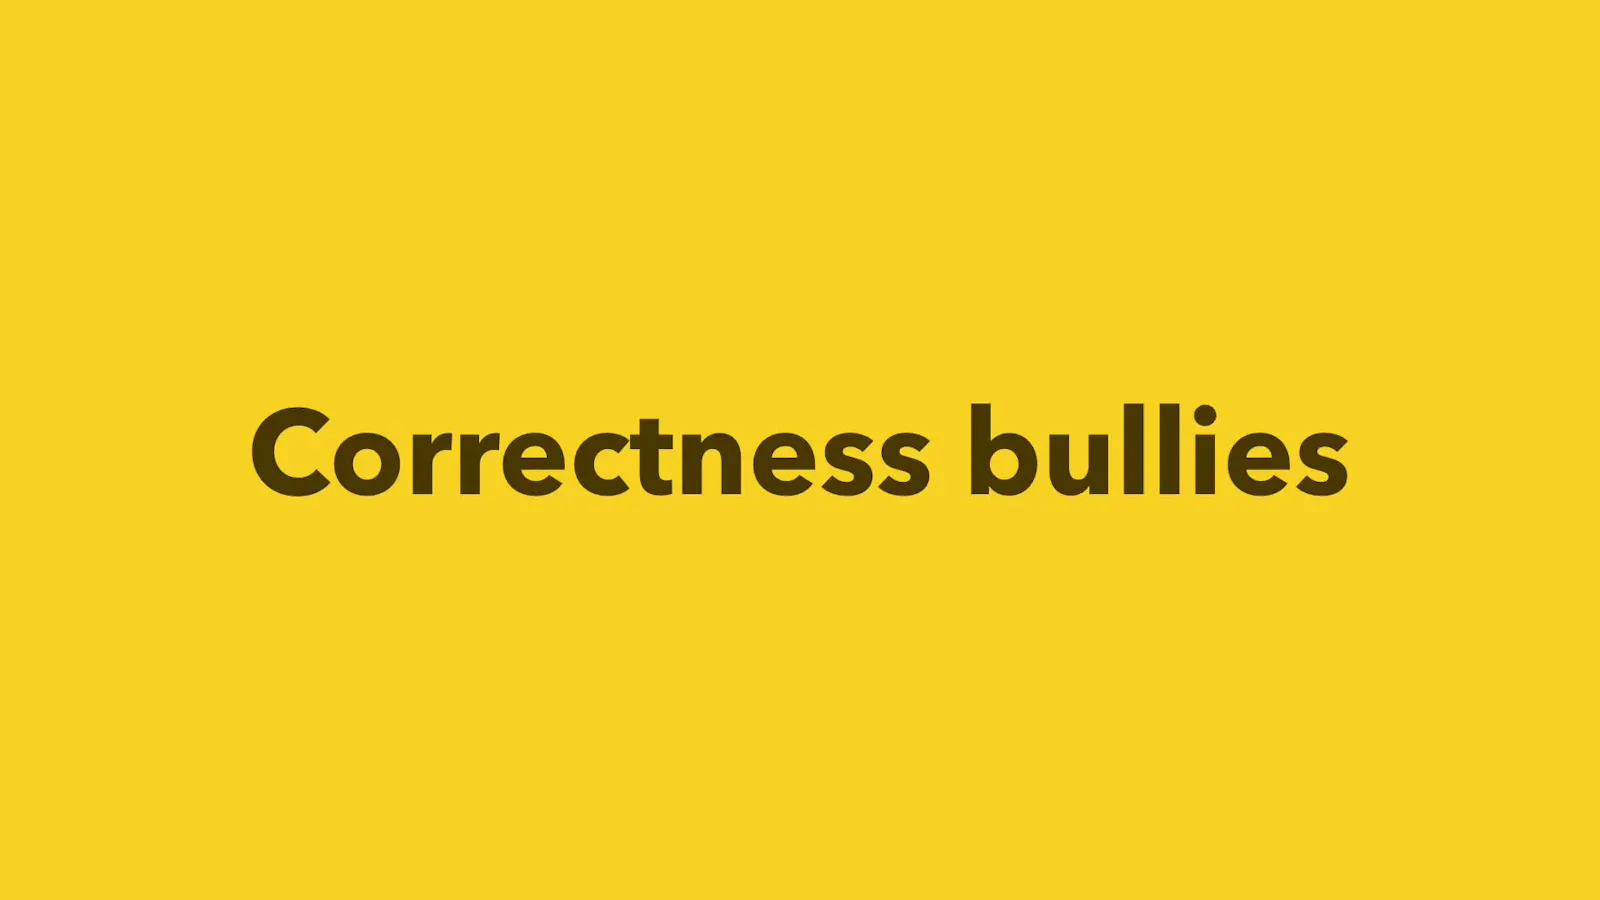 Correctness bullies